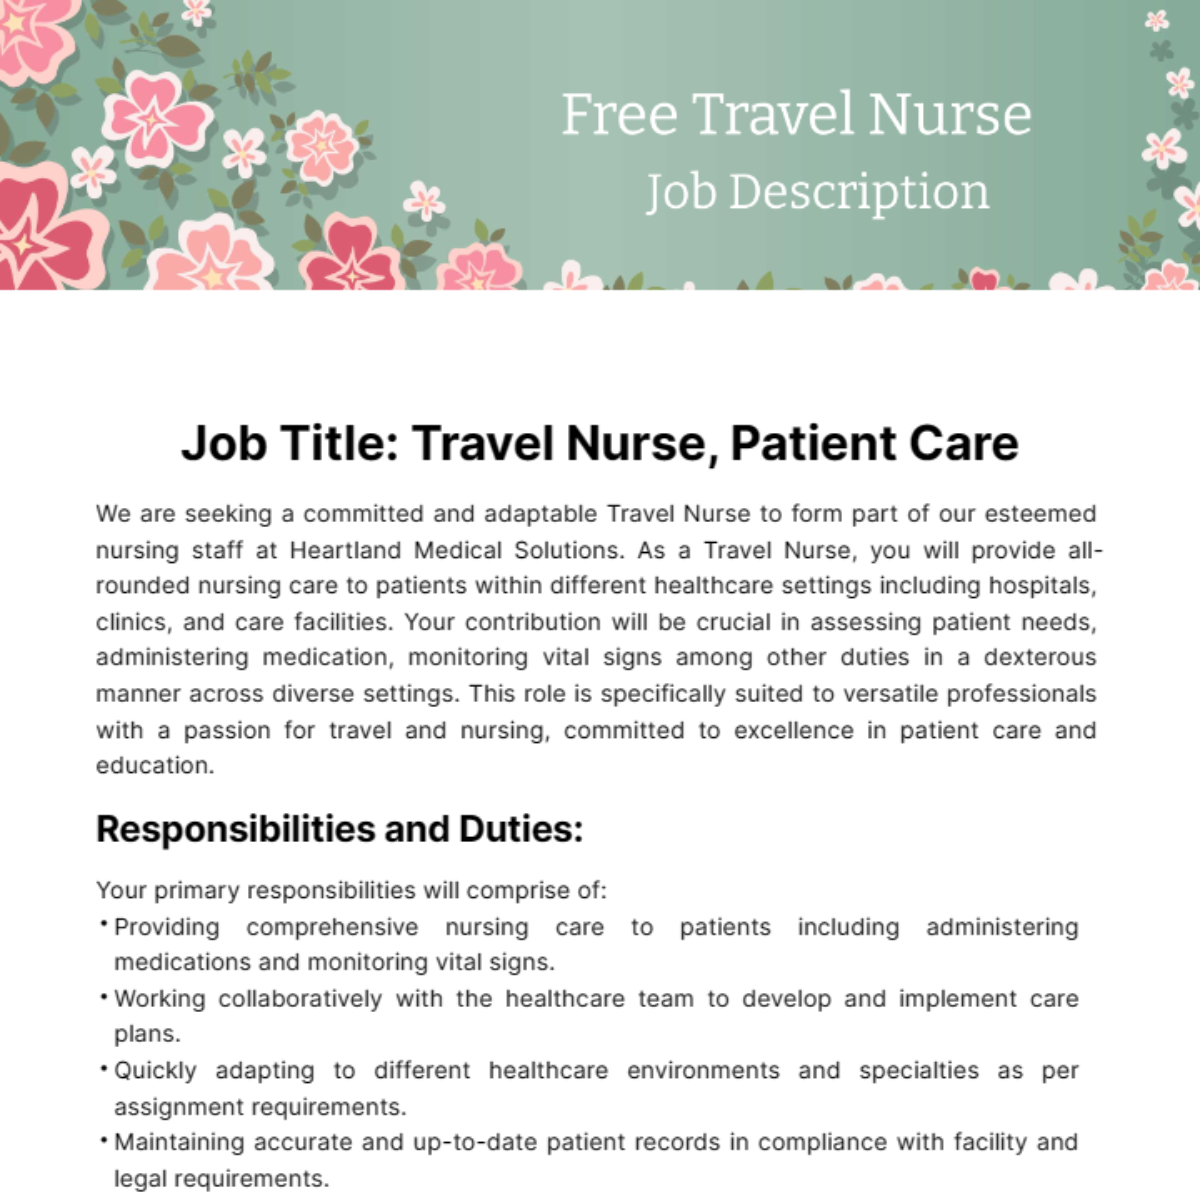 Free Travel Nurse Job Description Template